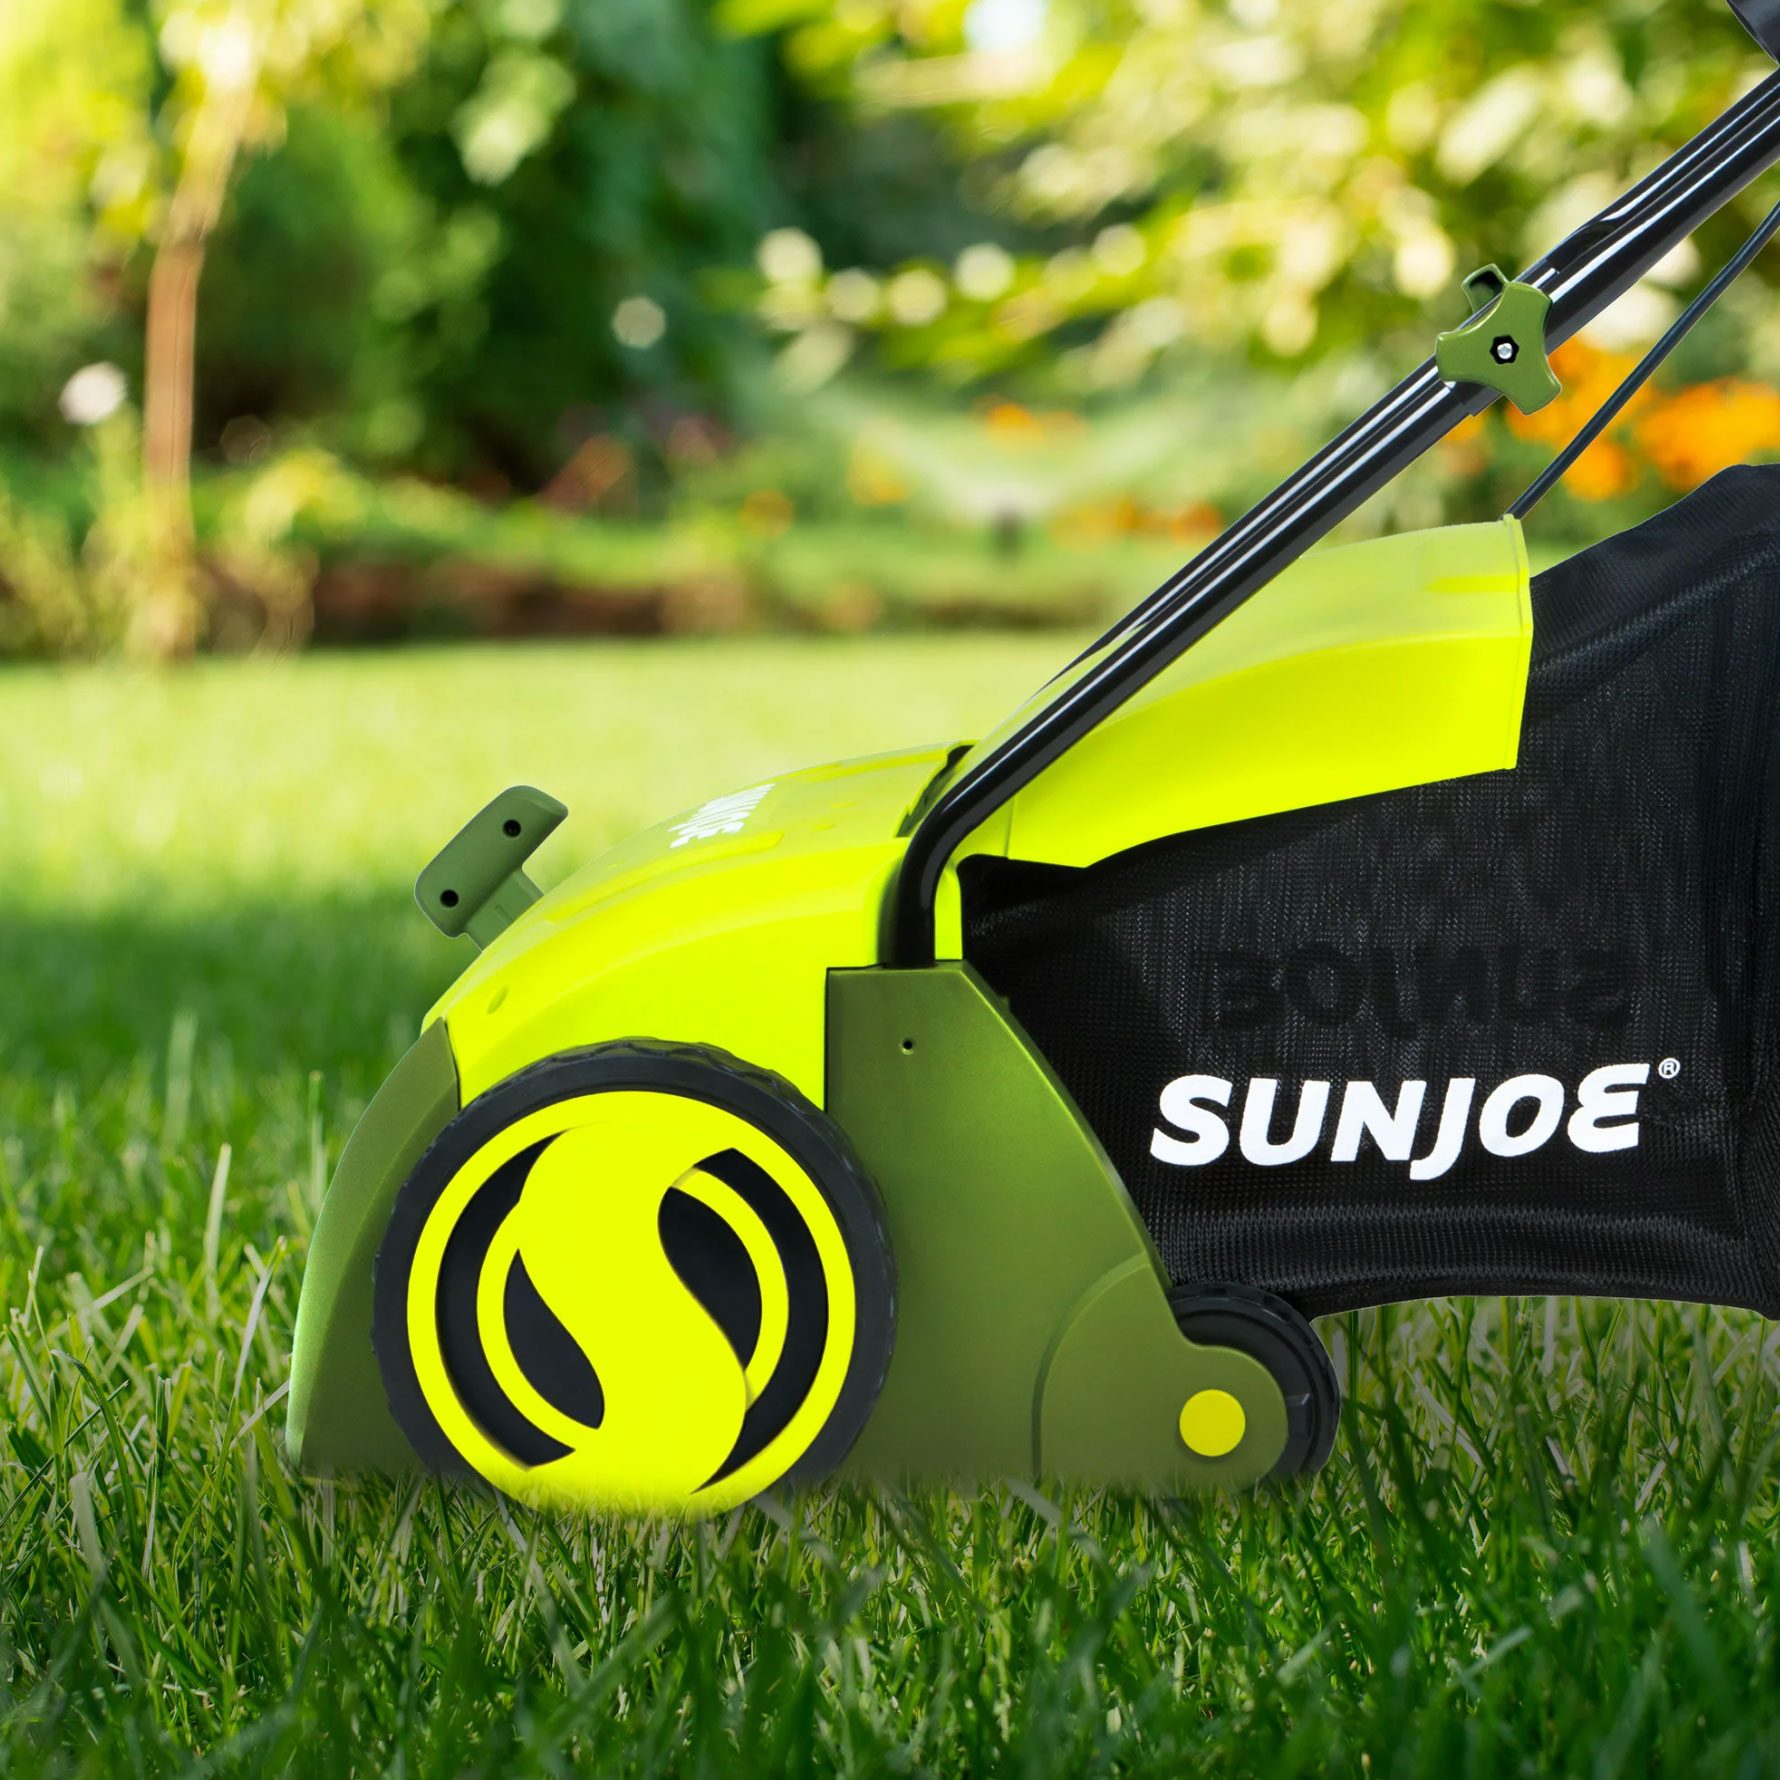 Sun Joe Dethatcher: How Does this Electric Lawn Dethatcher Work? Reviews & More